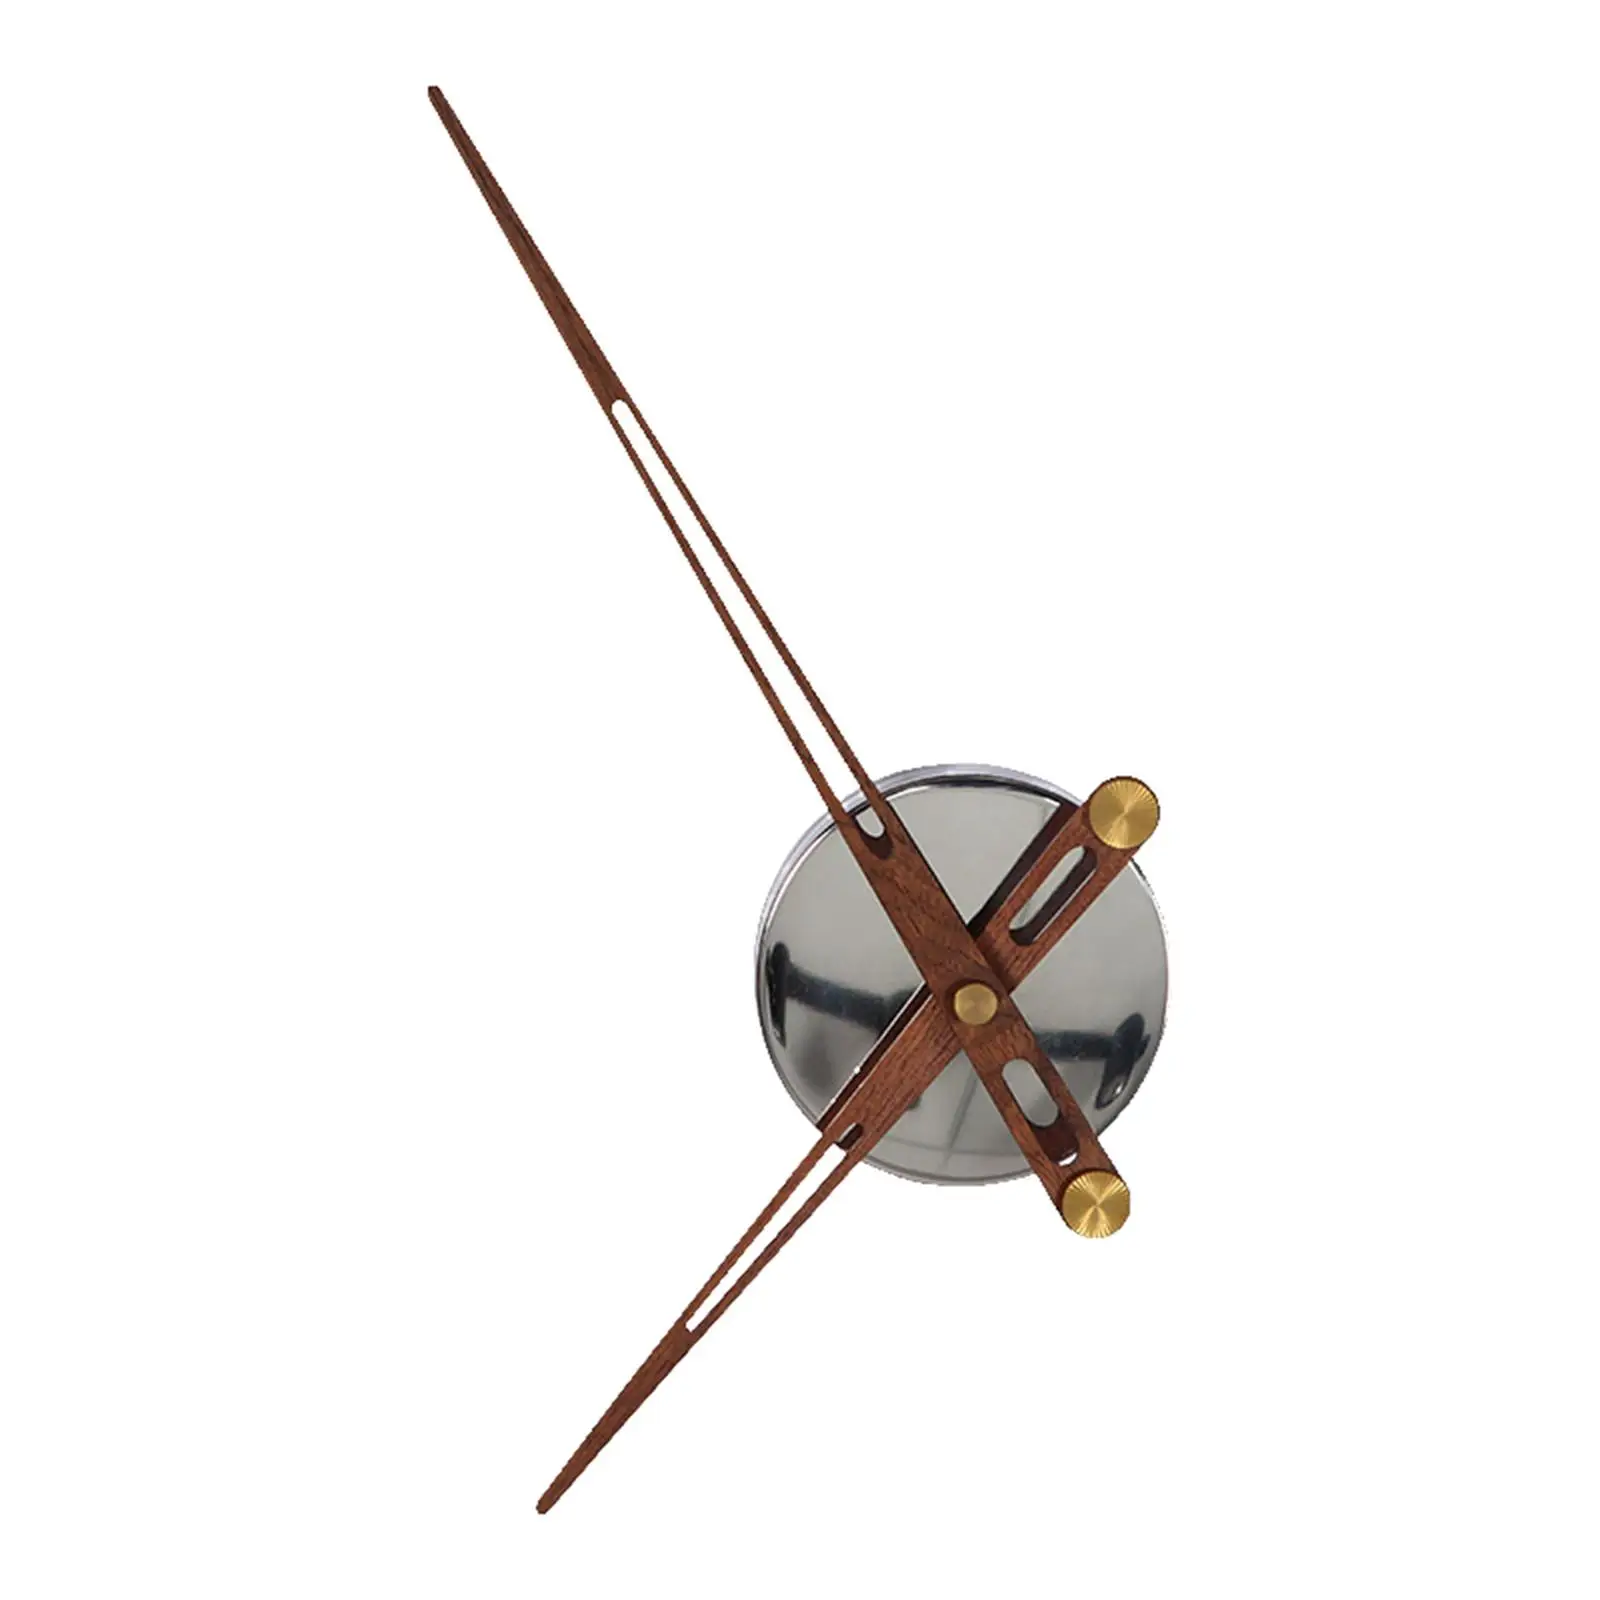 Clock Mechanism DIY Large Cross stitch Clock Hands Needles Wall Clocks Home Art Decor Accessories